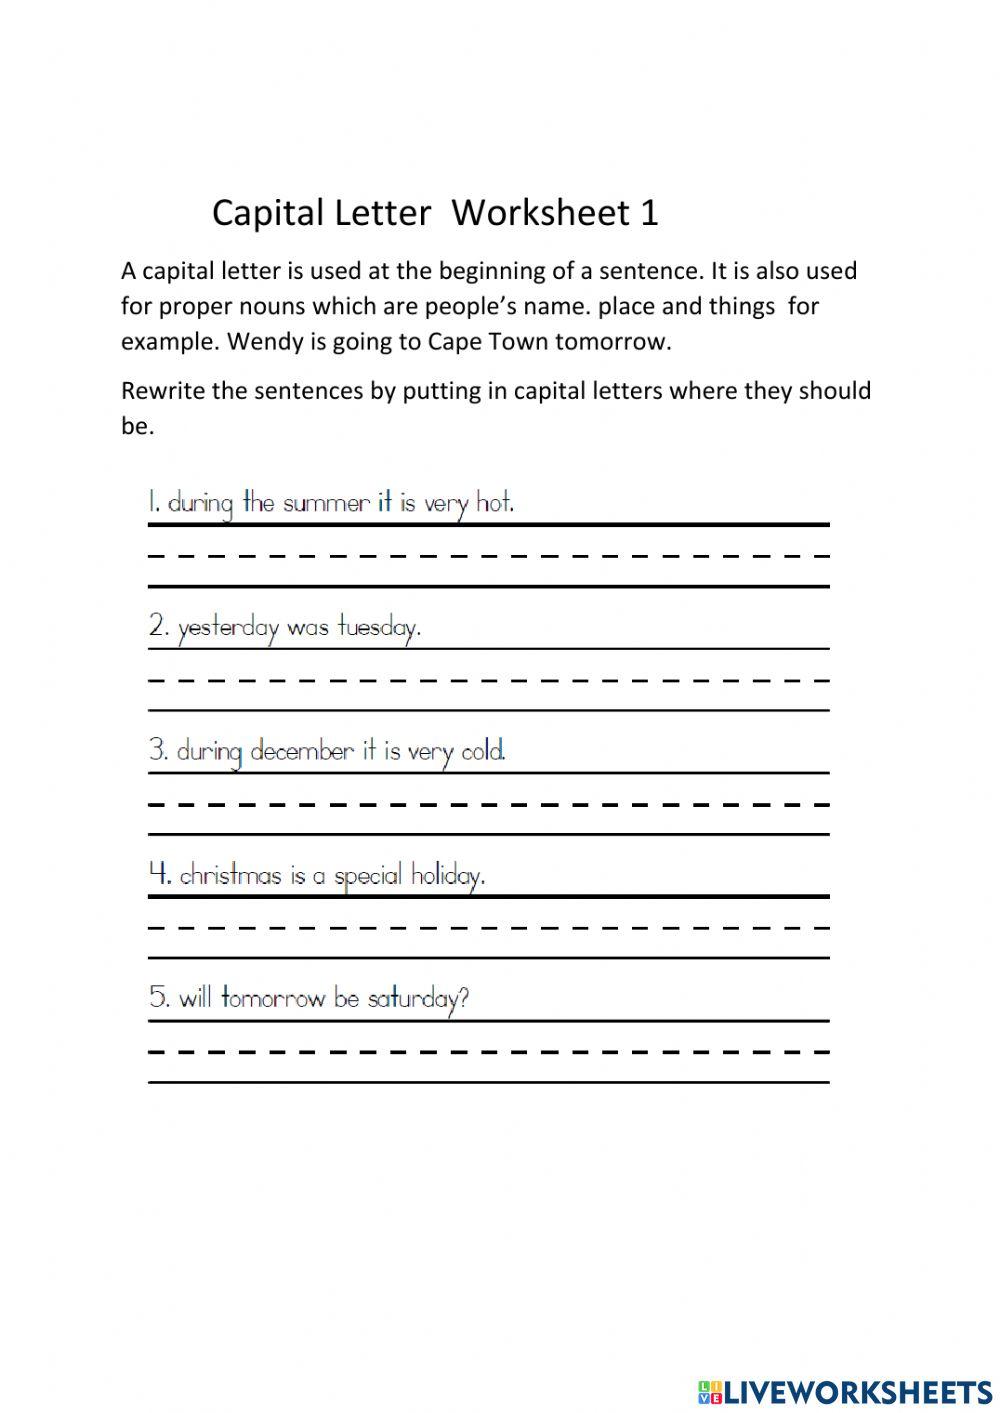 Capital Letters Worksheet 1